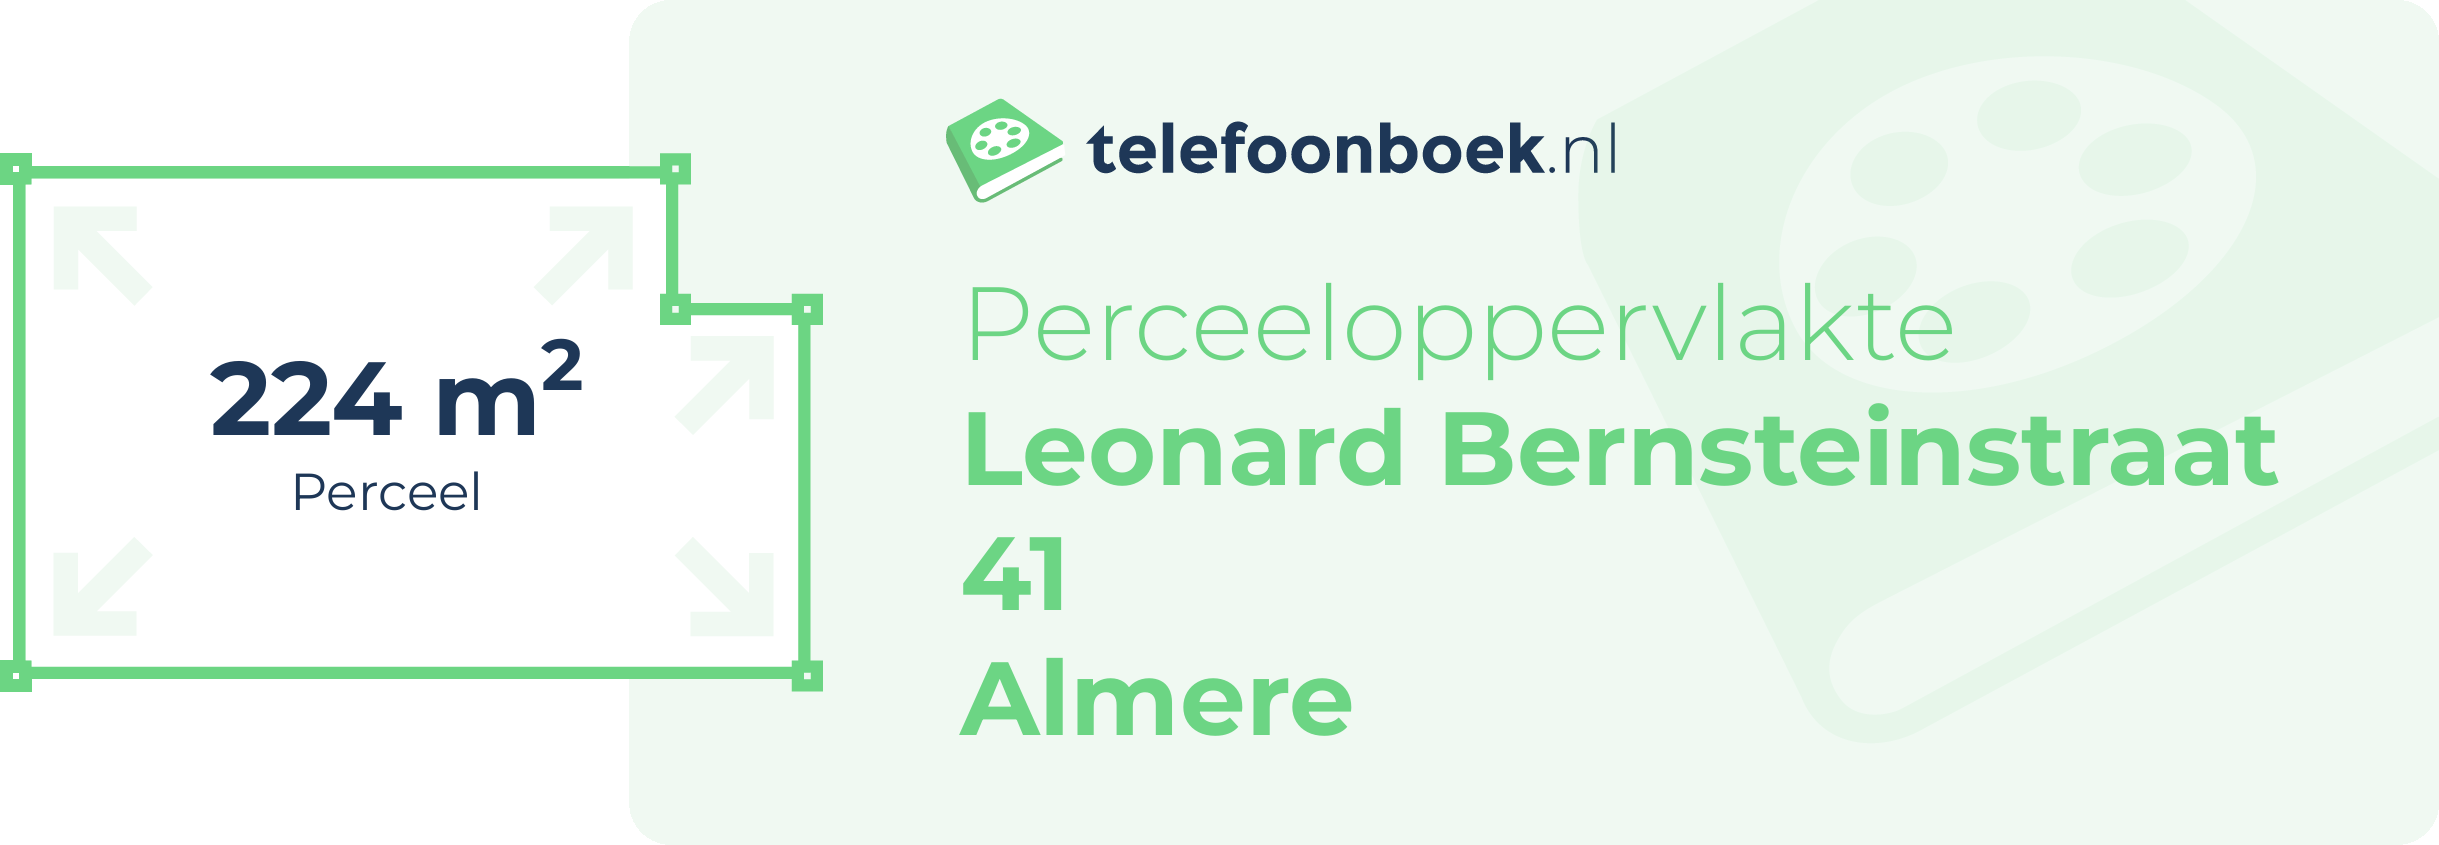 Perceeloppervlakte Leonard Bernsteinstraat 41 Almere